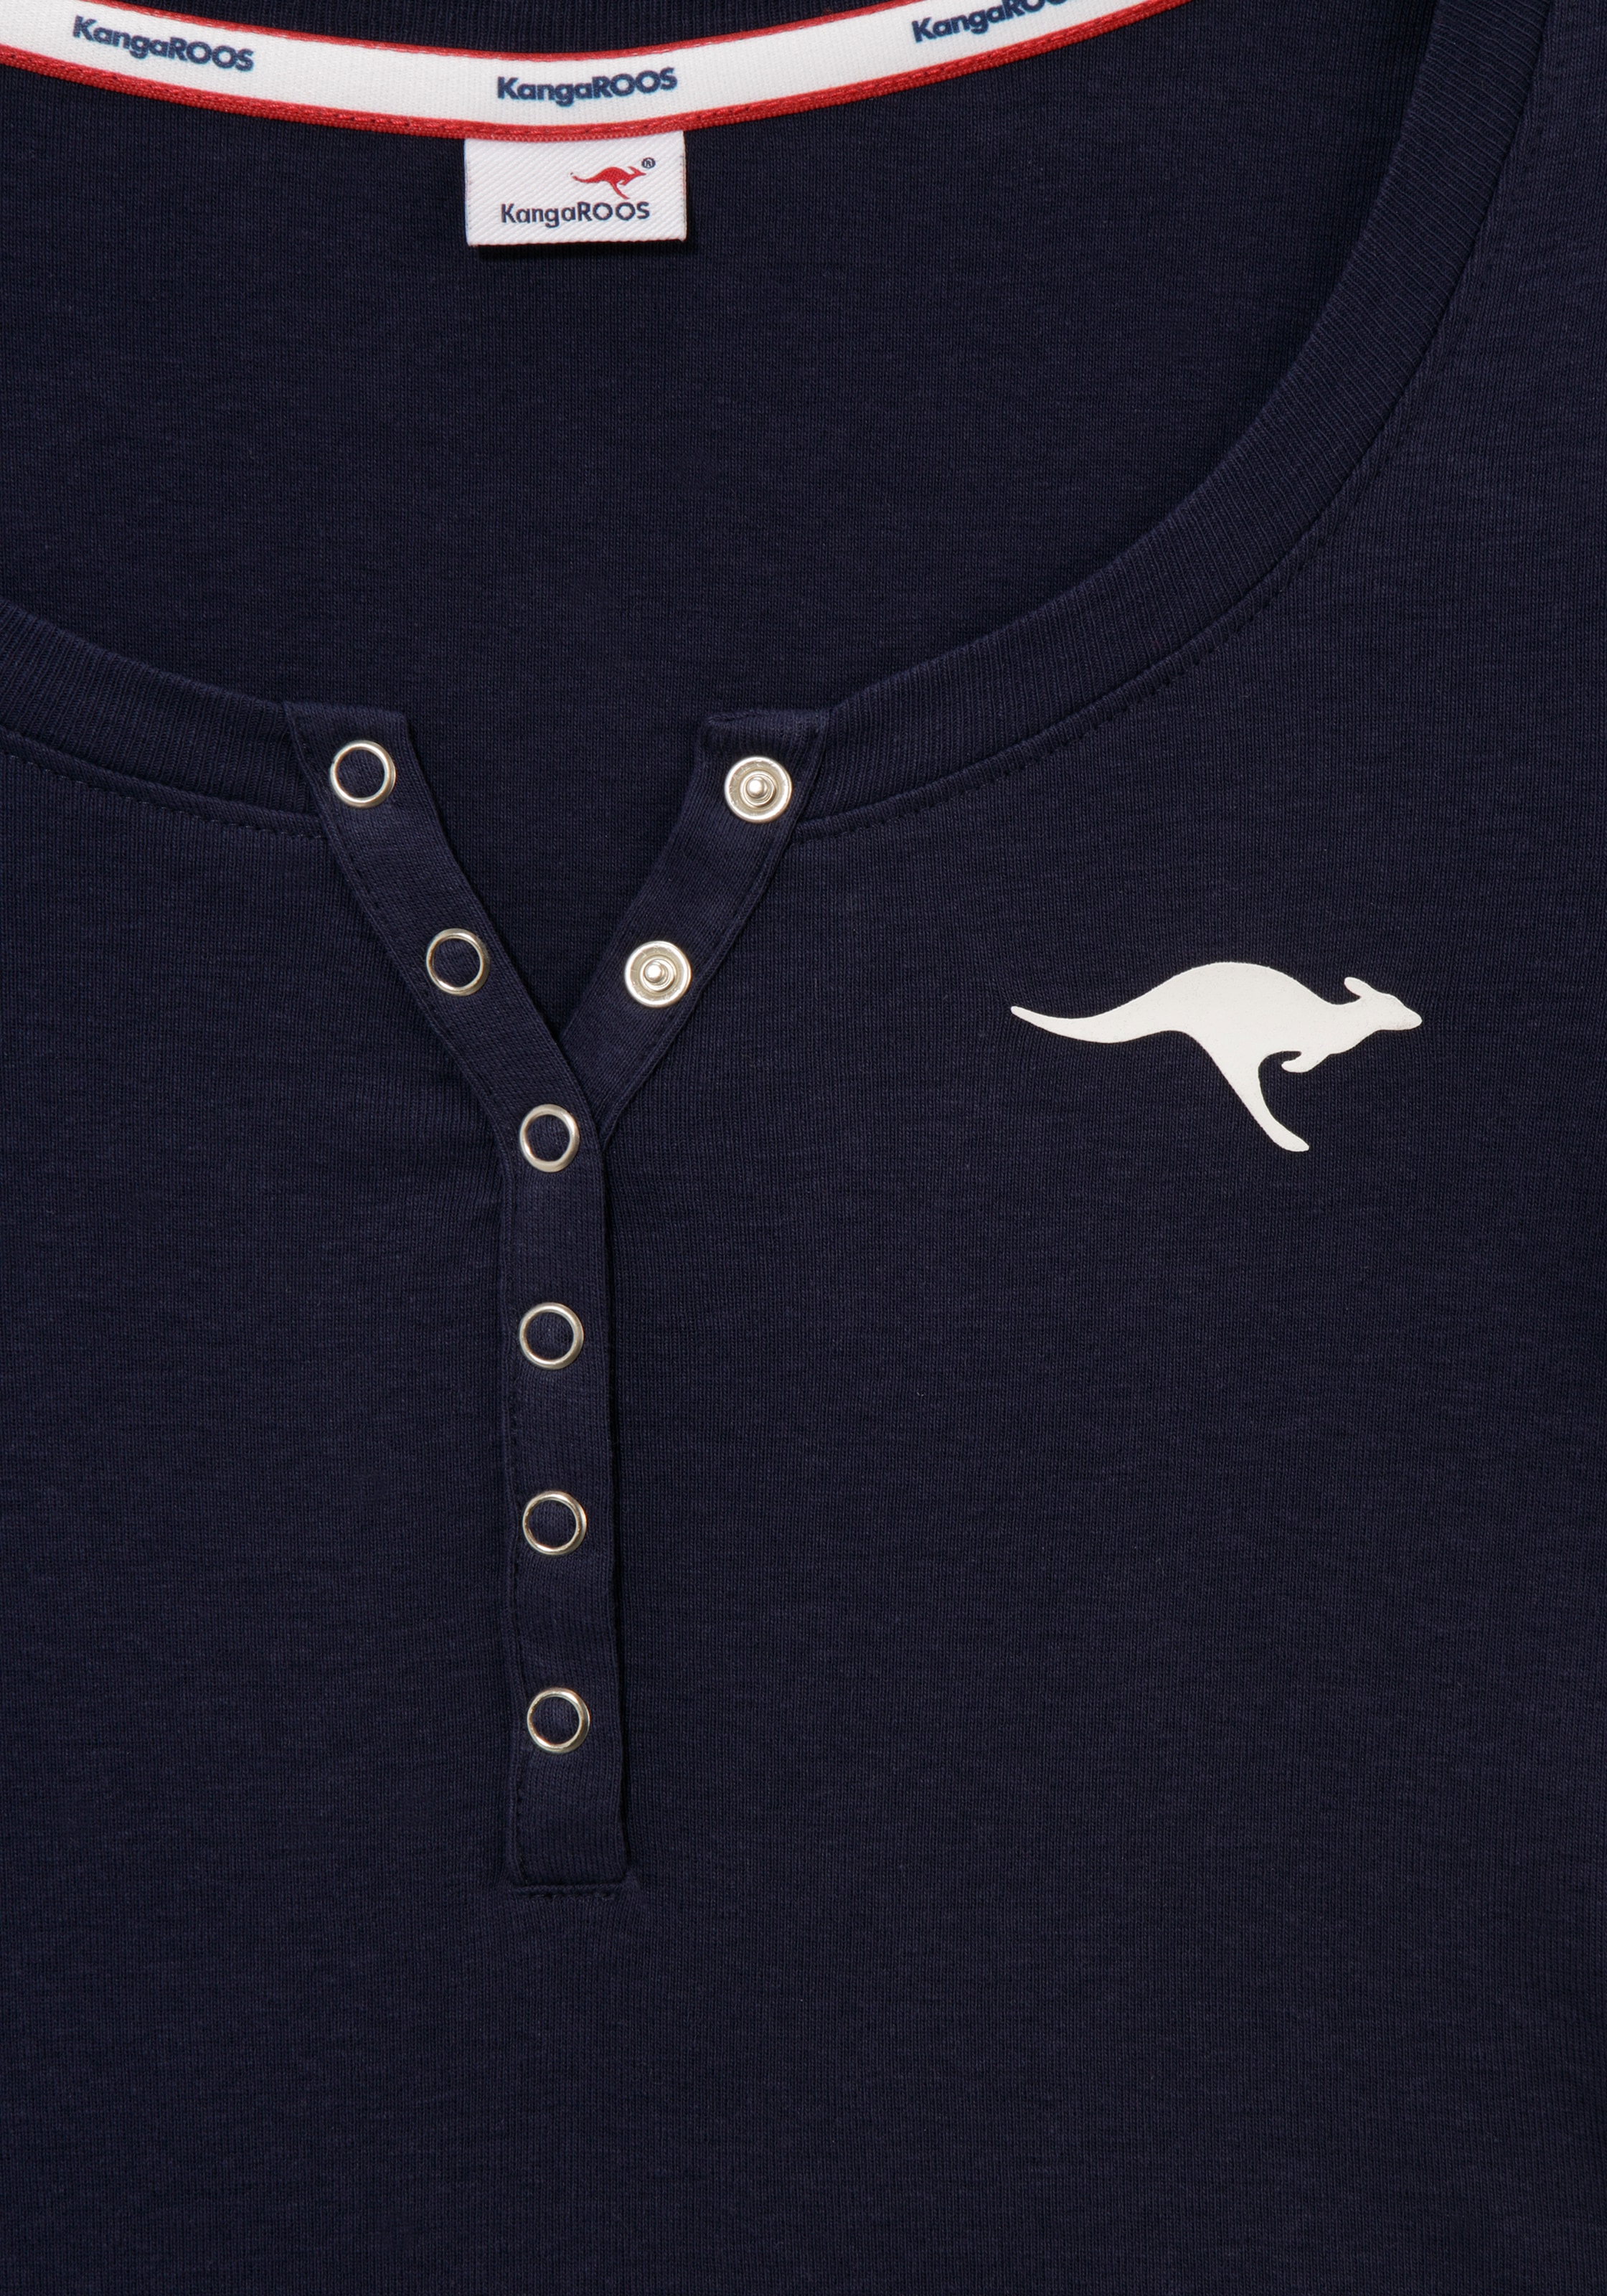 KangaROOS Langarmshirt, mit Känguru-Logodruck und Knopfleiste